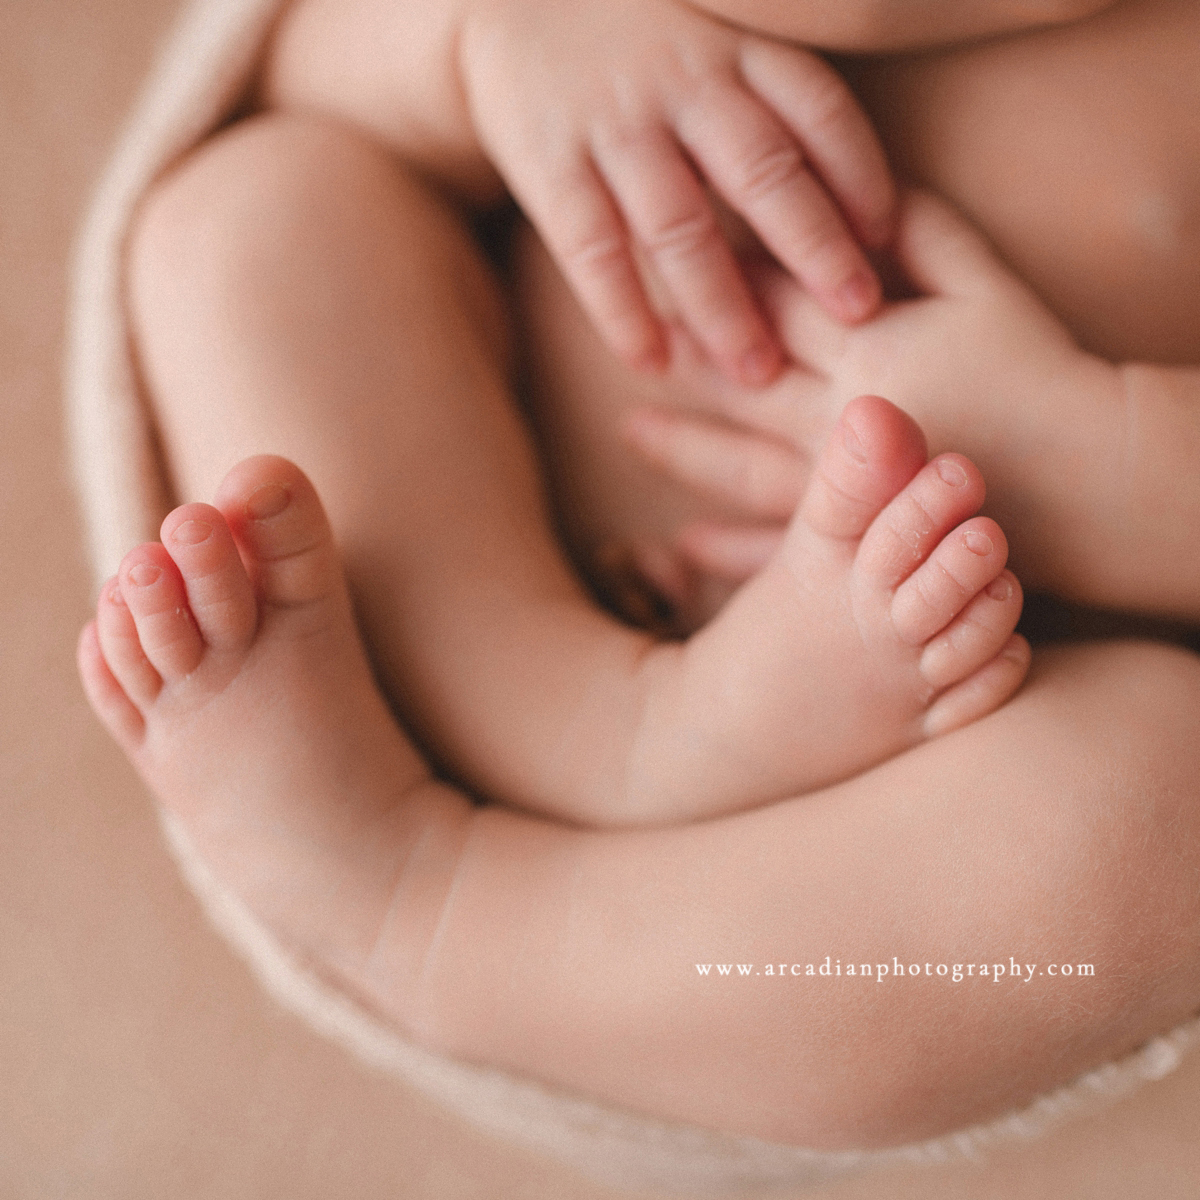 newborn details - toes